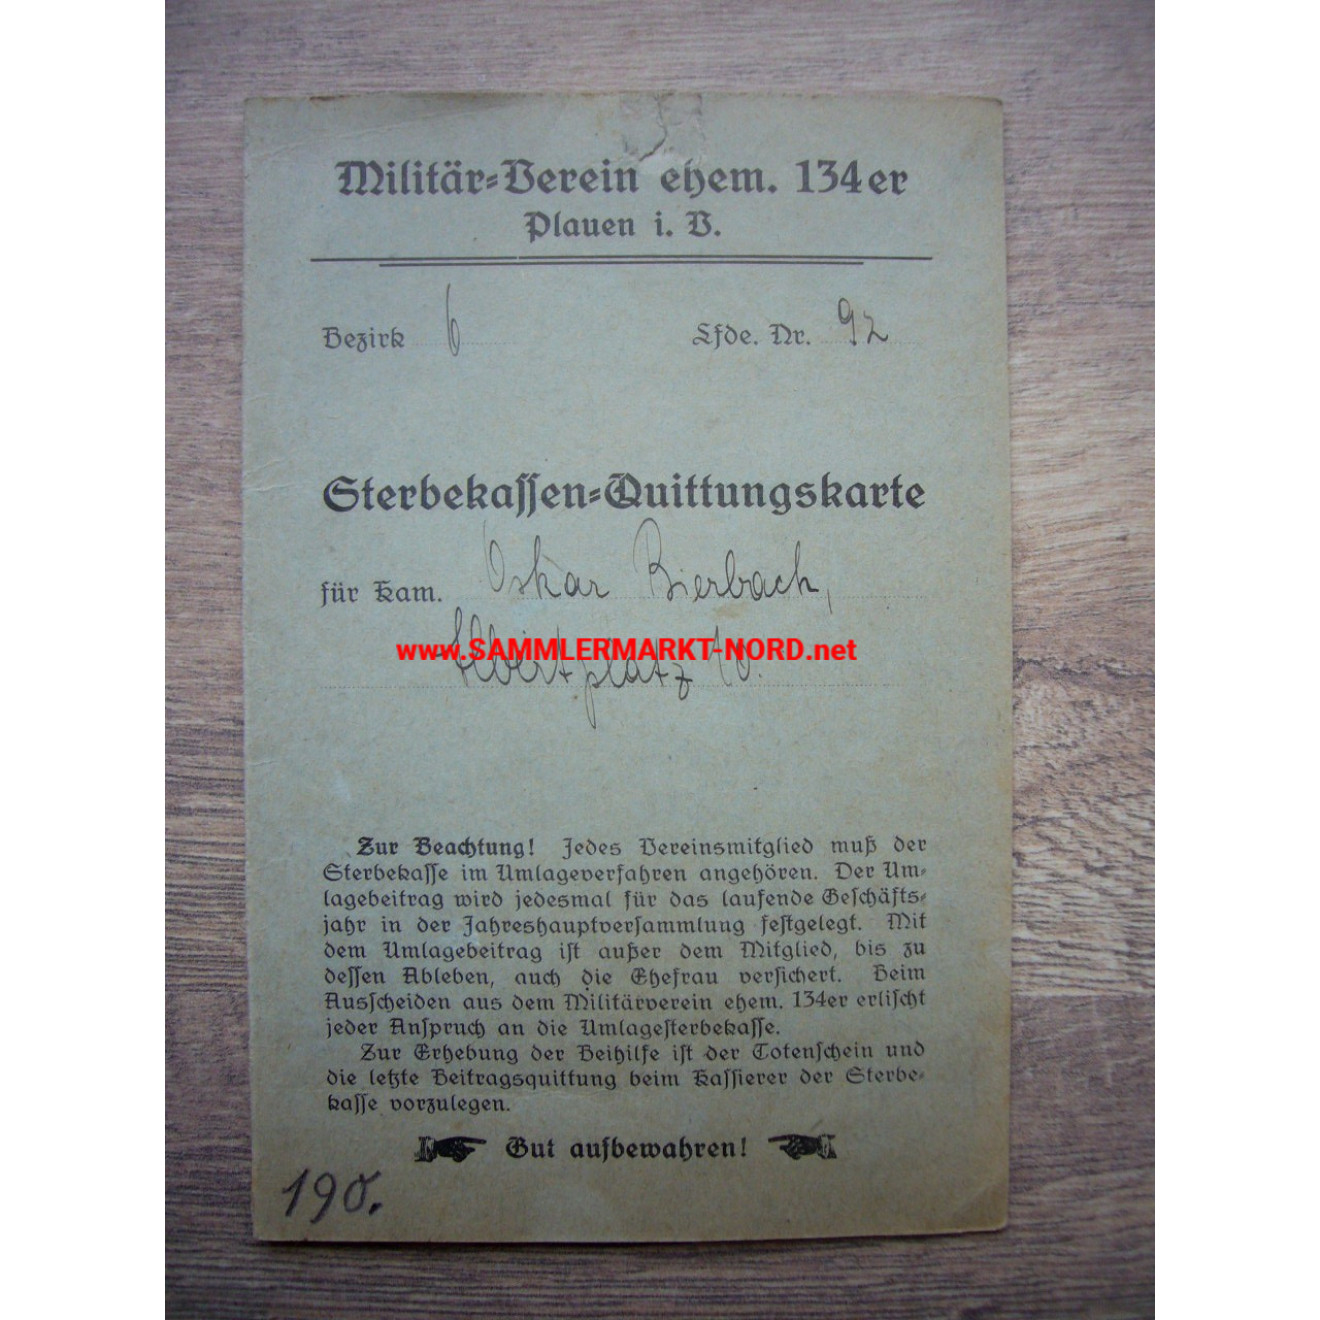 Military Association of the former 134, Plauen im Vogtland - Death Fund Receipt Card